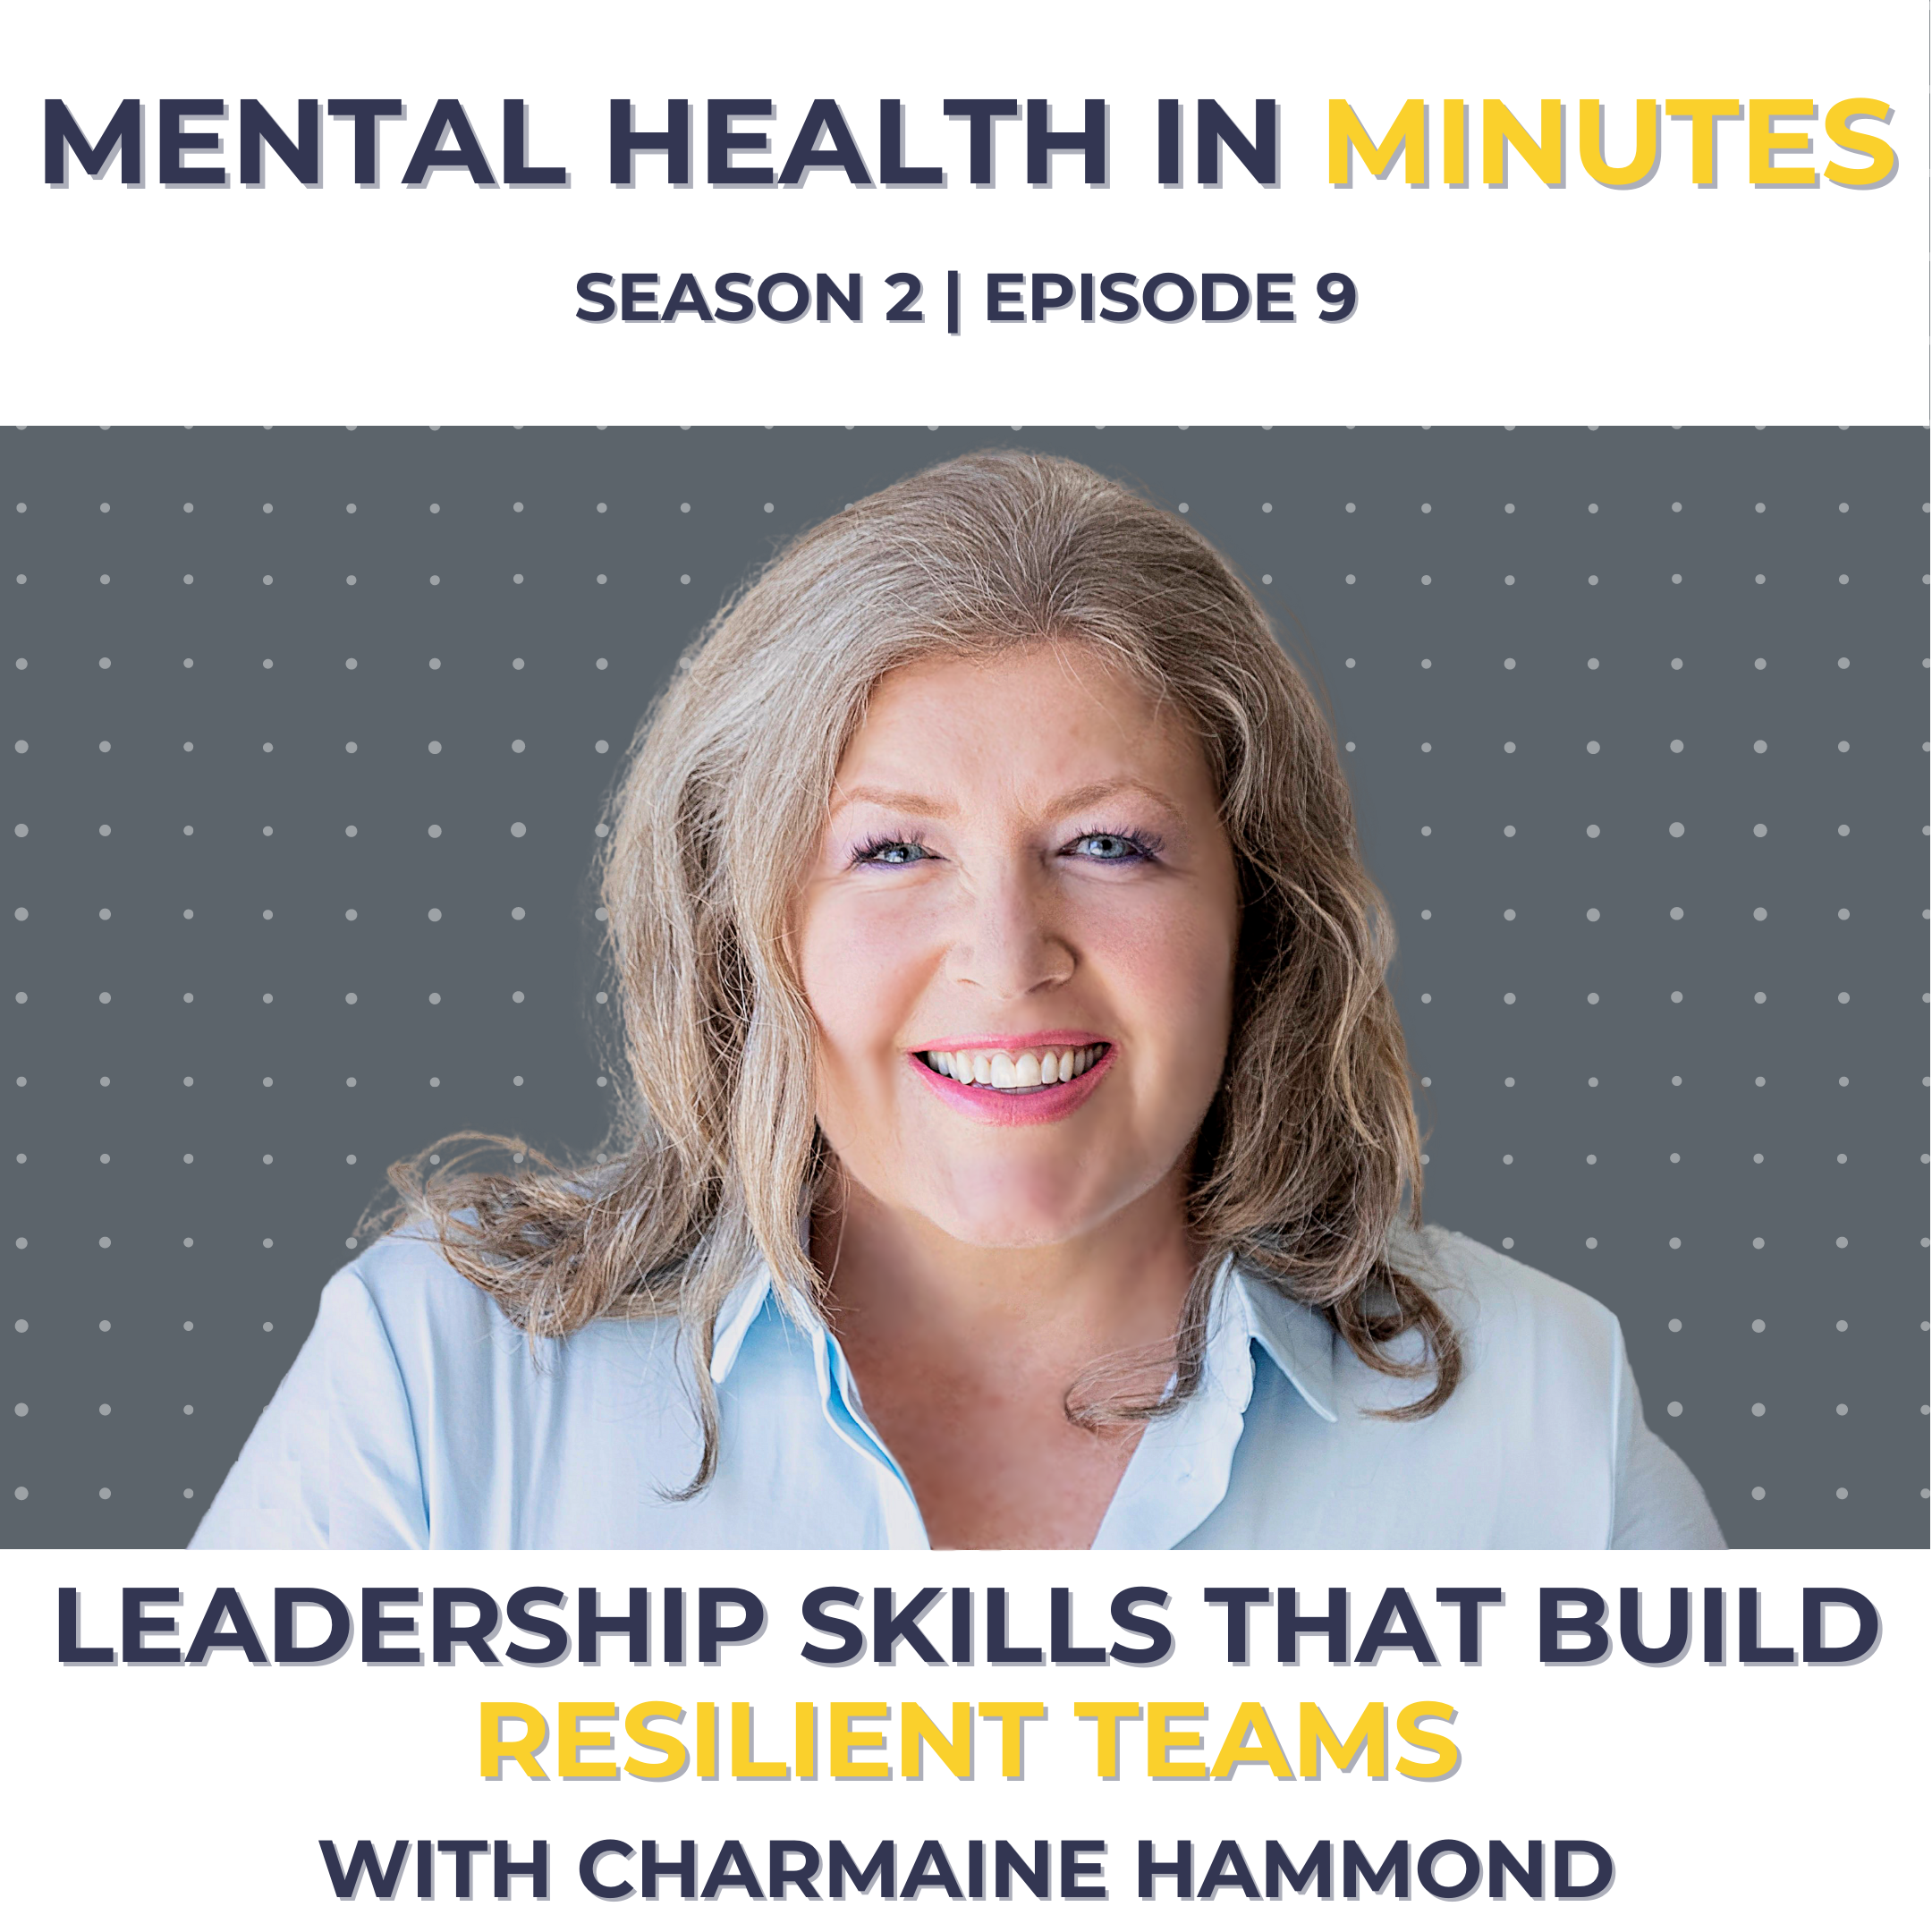 Leadership Skills That Build Resilient Teams with Charmaine Hammond